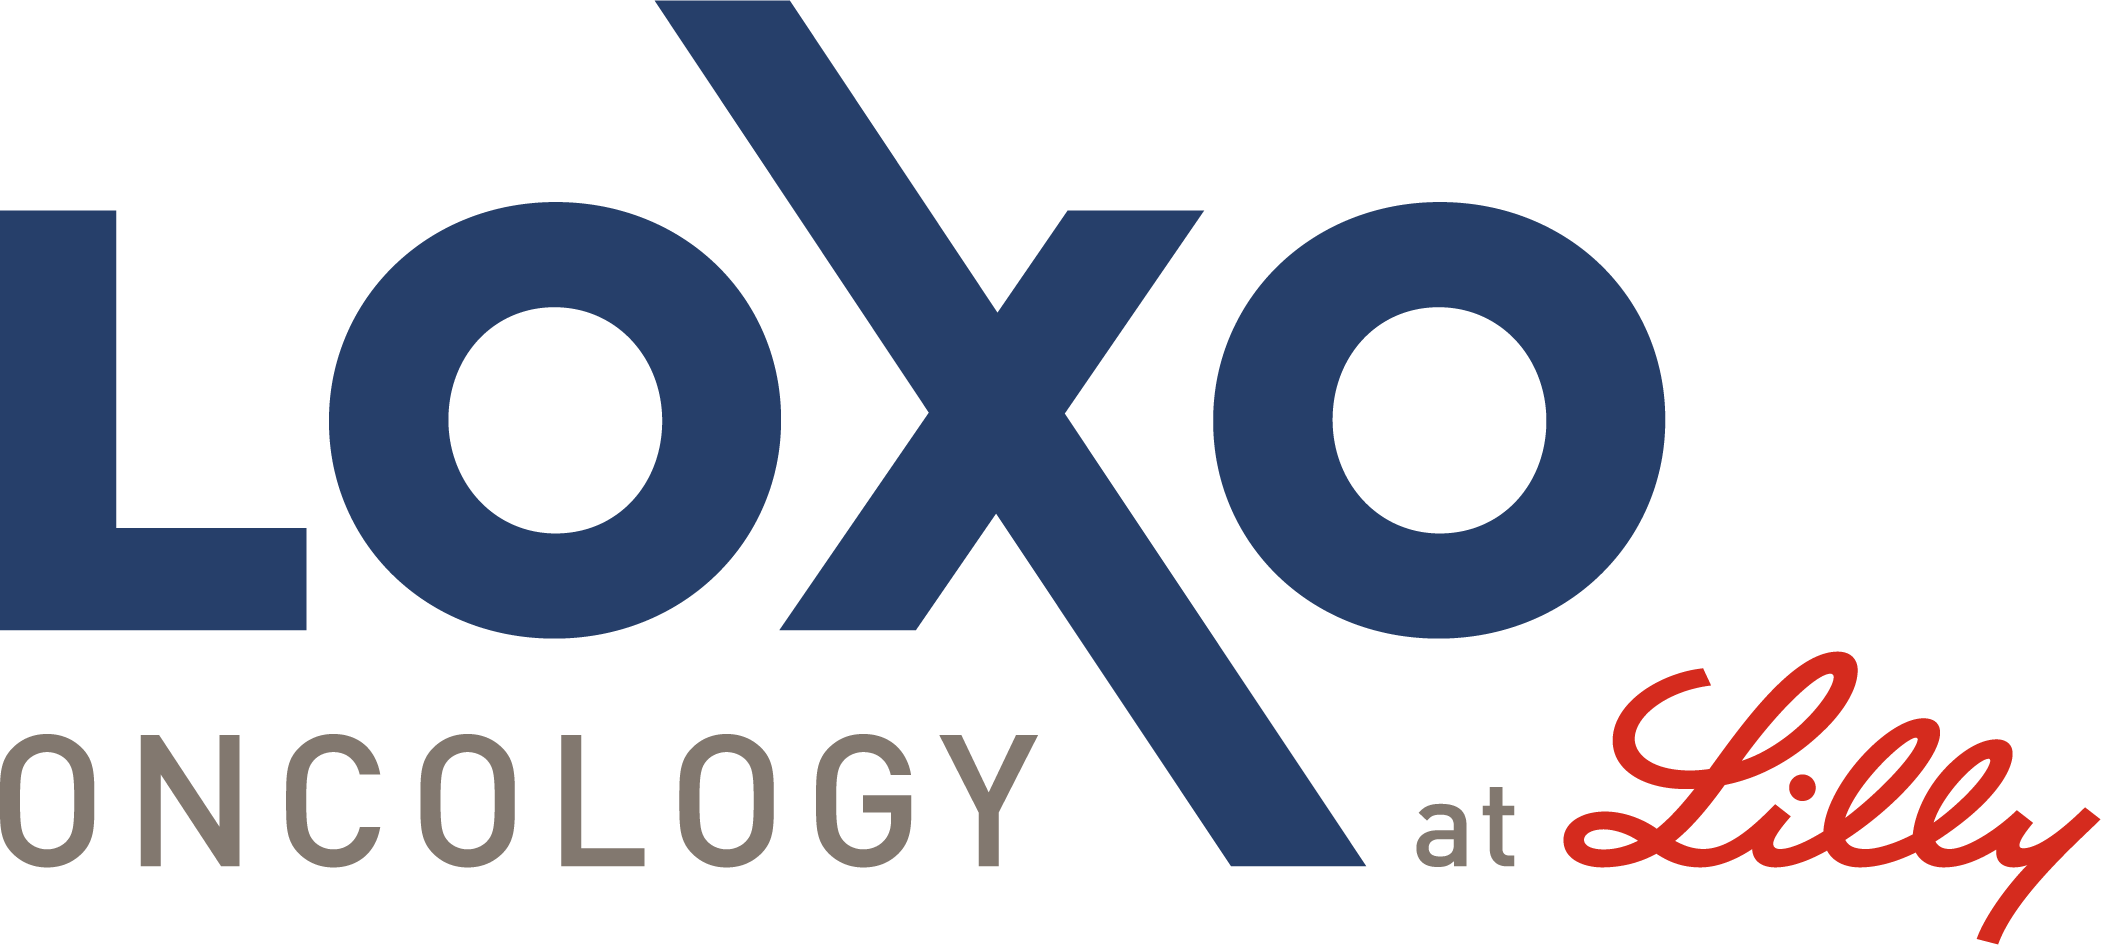 Loxo oncology logo